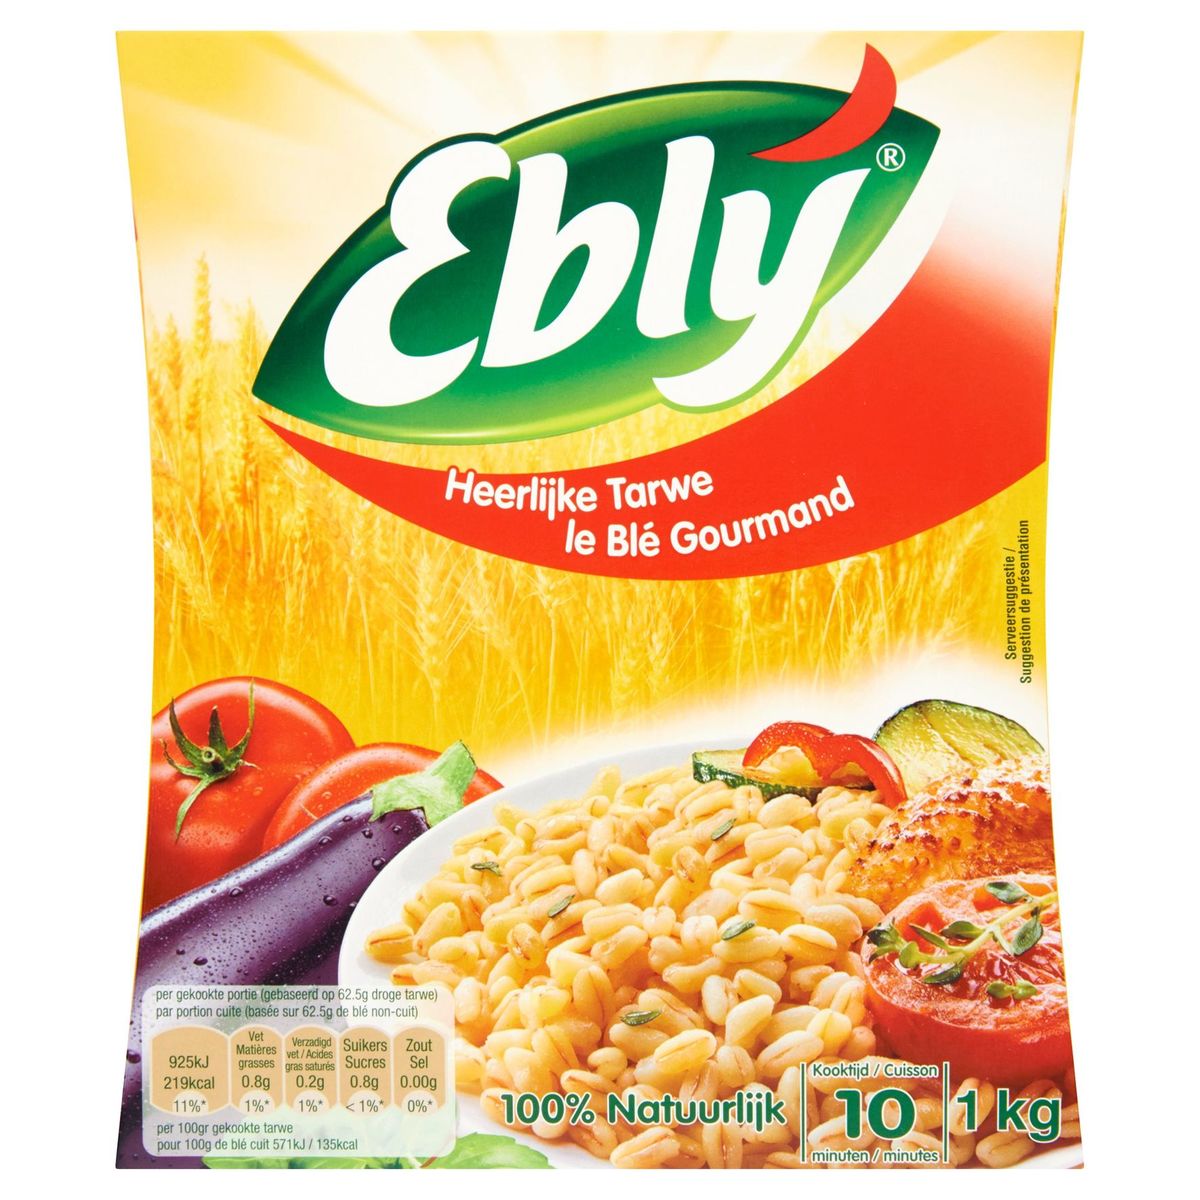 Ebly Le Blé Gourmand 1 kg